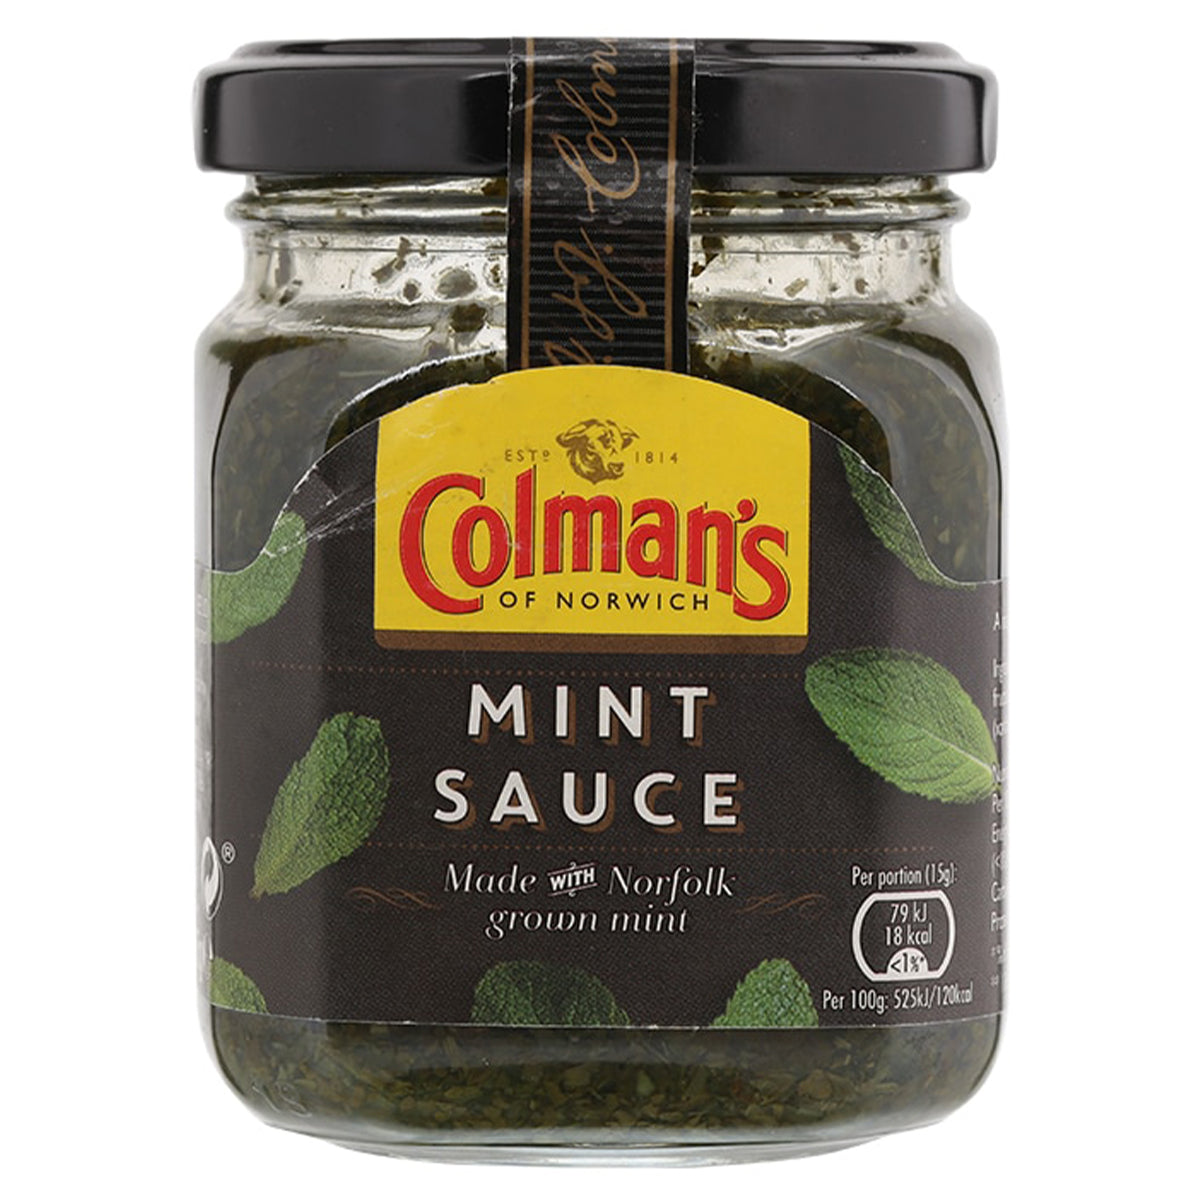 Colmans - Mint Sauce - 165g - Continental Food Store